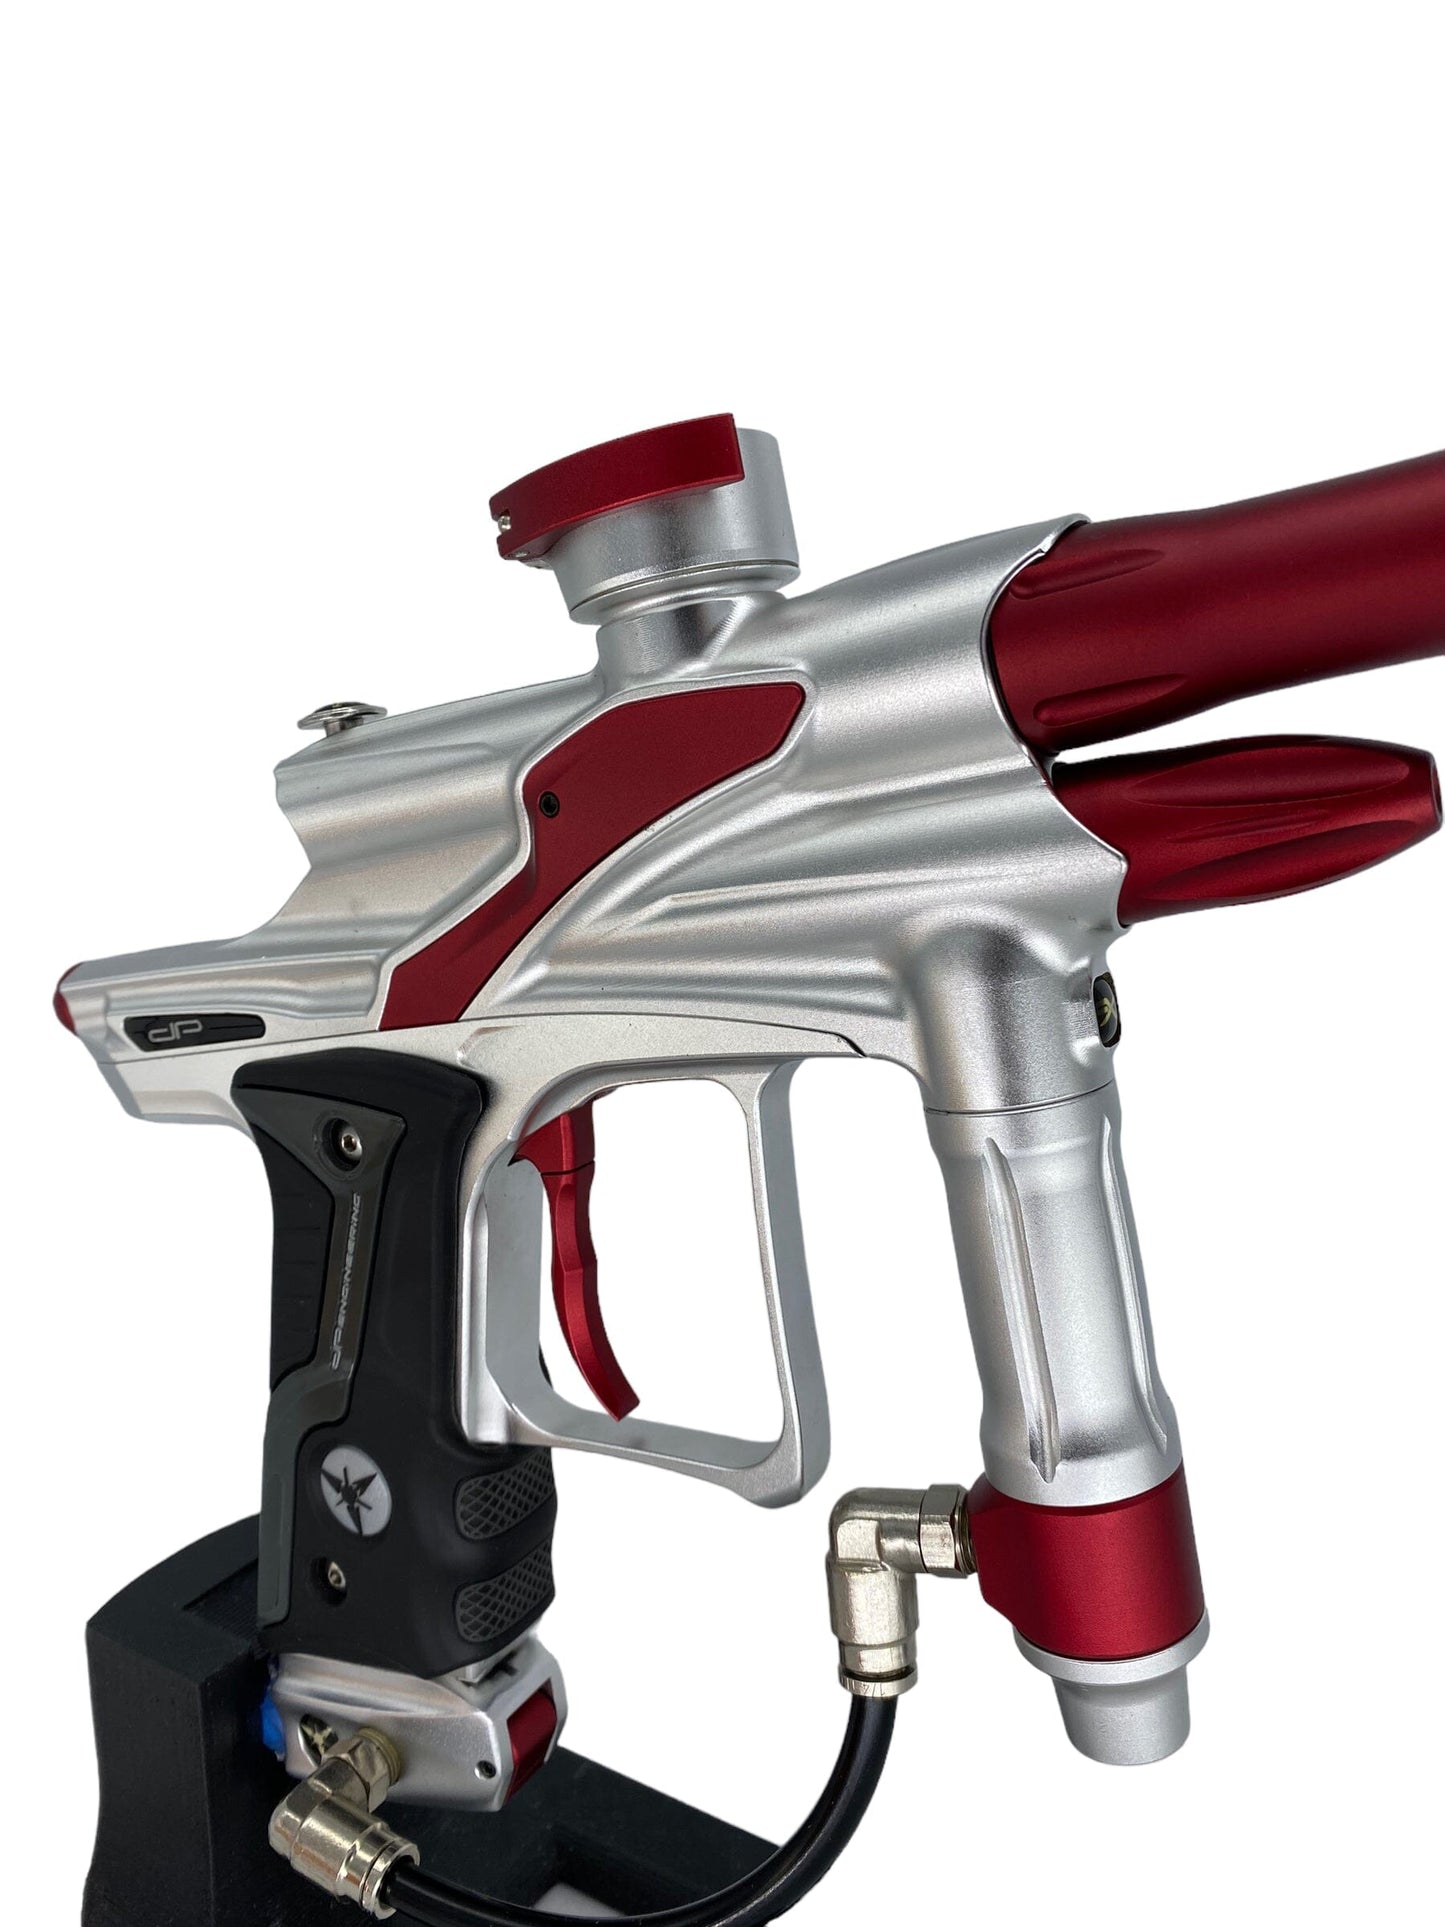 Used Dangerous Power Fusion FX Paintball Gun Paintball Gun from CPXBrosPaintball Buy/Sell/Trade Paintball Markers, Paintball Hoppers, Paintball Masks, and Hormesis Headbands